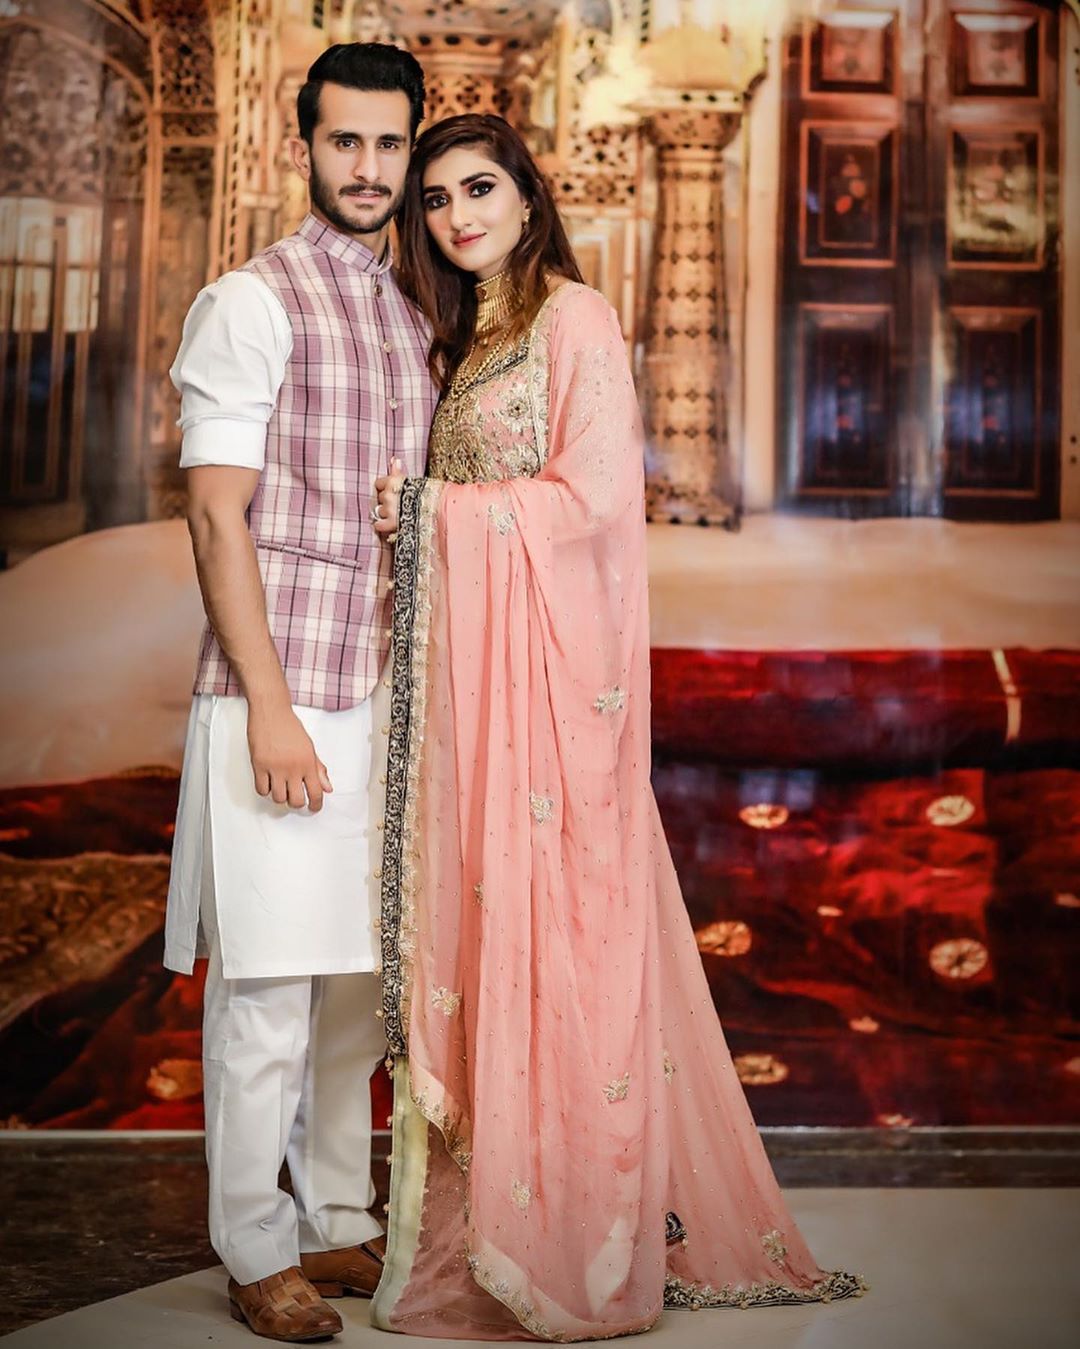 Hassan Ali with his Wife at Sania Mirza and Shoaib Malik Home in Dubai